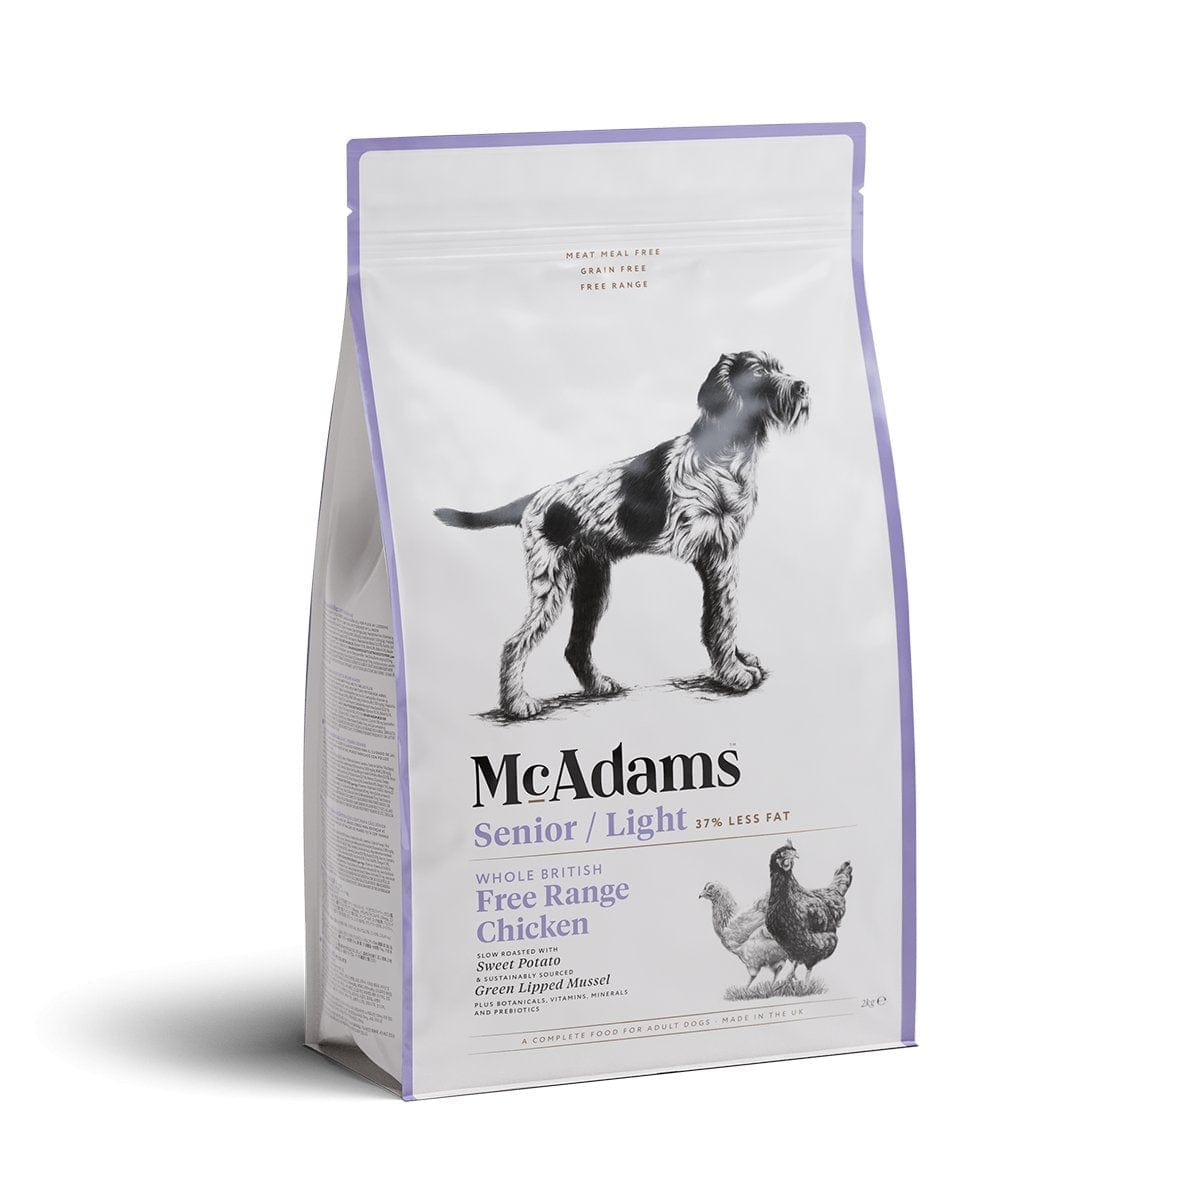 Mcadams Free Range Chicken Senior/Light Dry Dog Food - Walkies